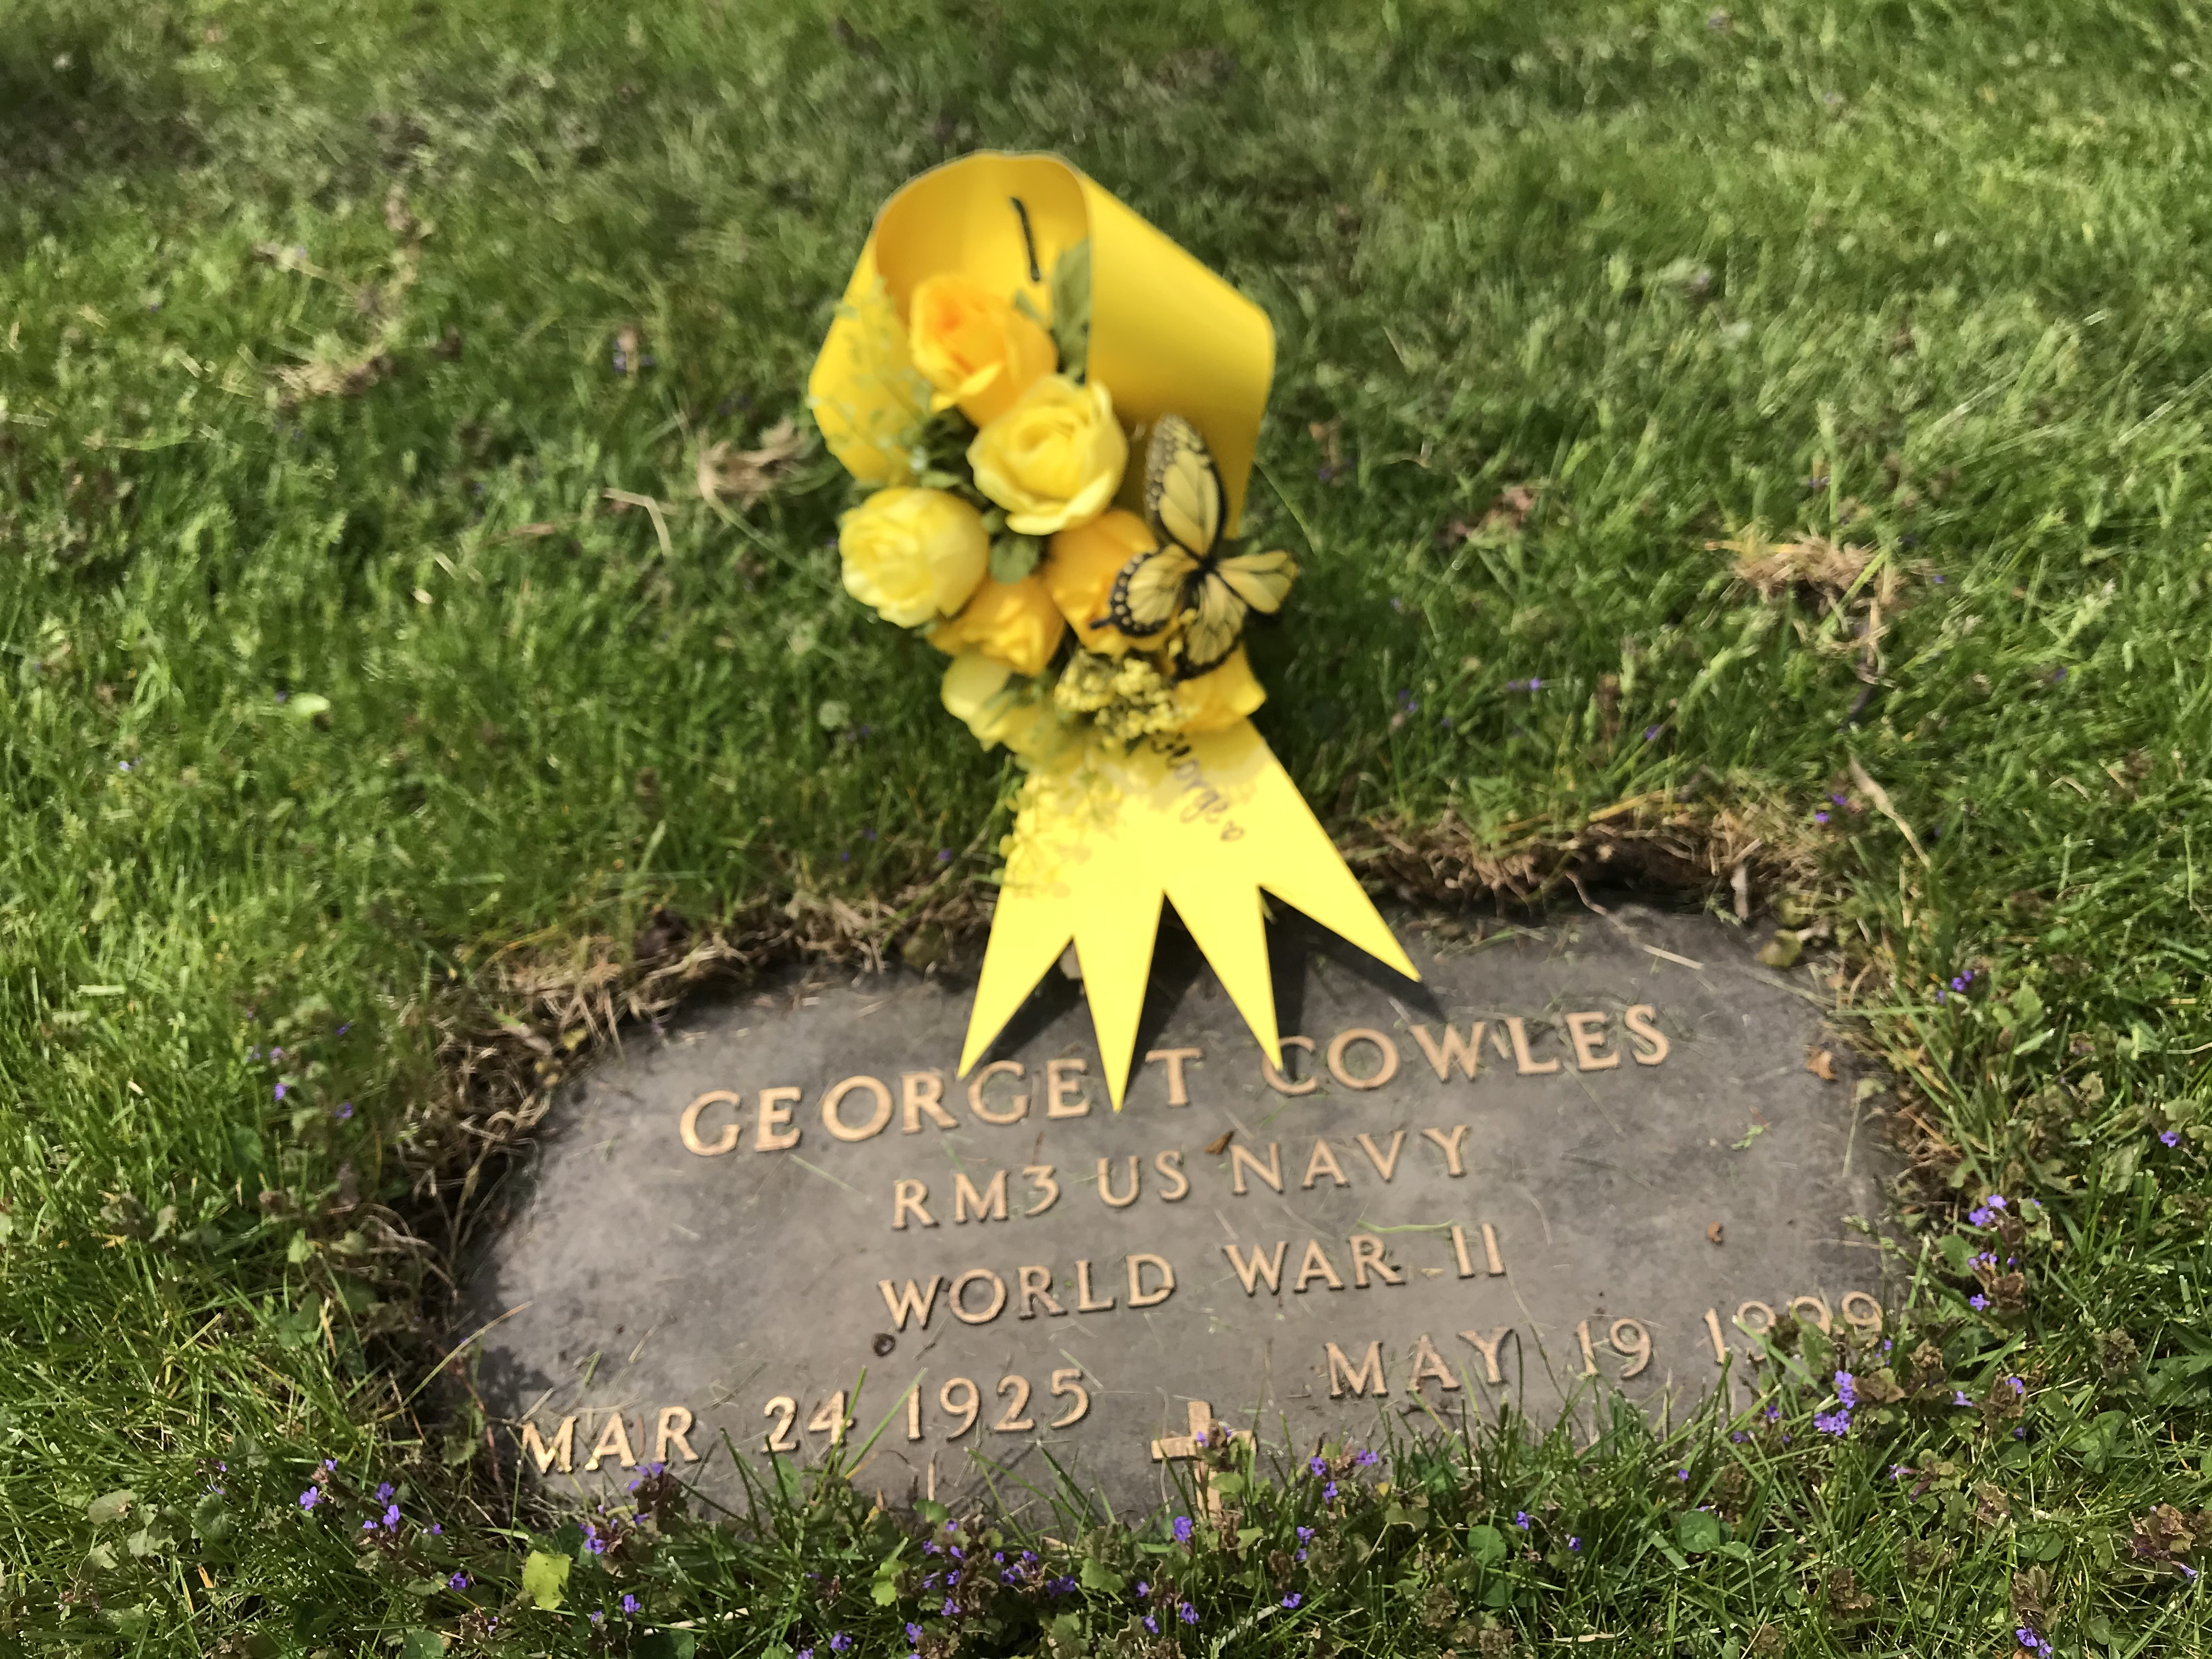  George Cowles Gravesite